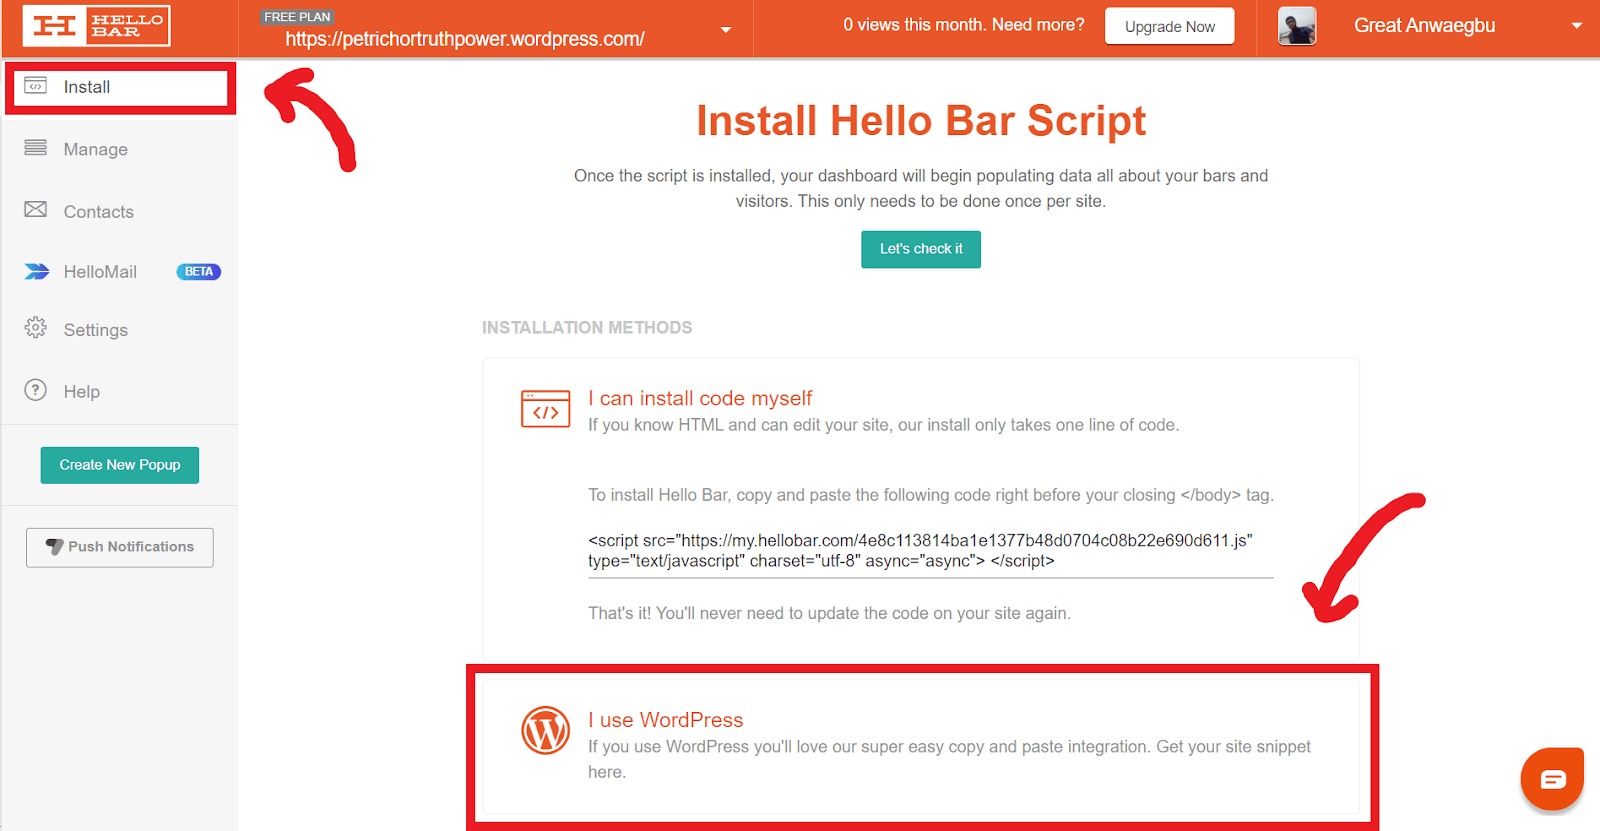 Install Hello Bar script to WordPress